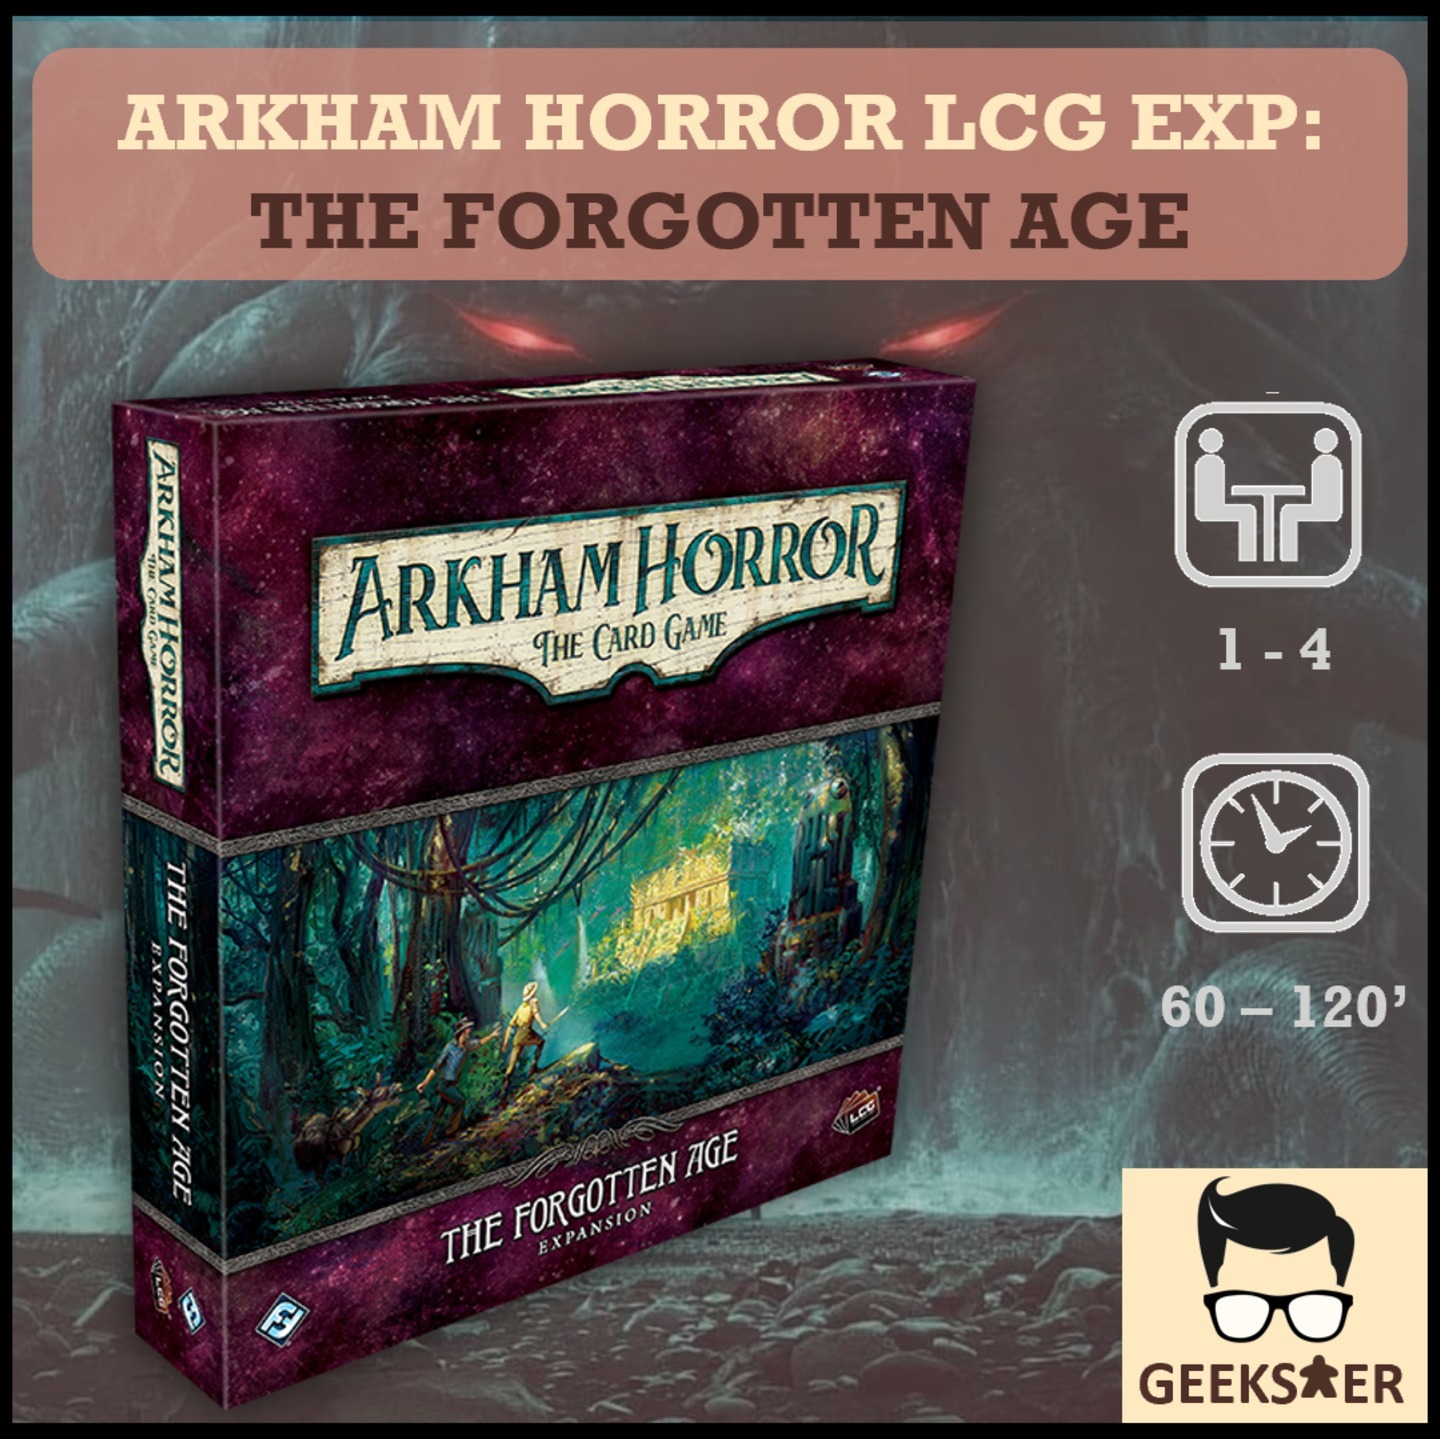 Arkham Horror LCG Exp The Forgotten Age